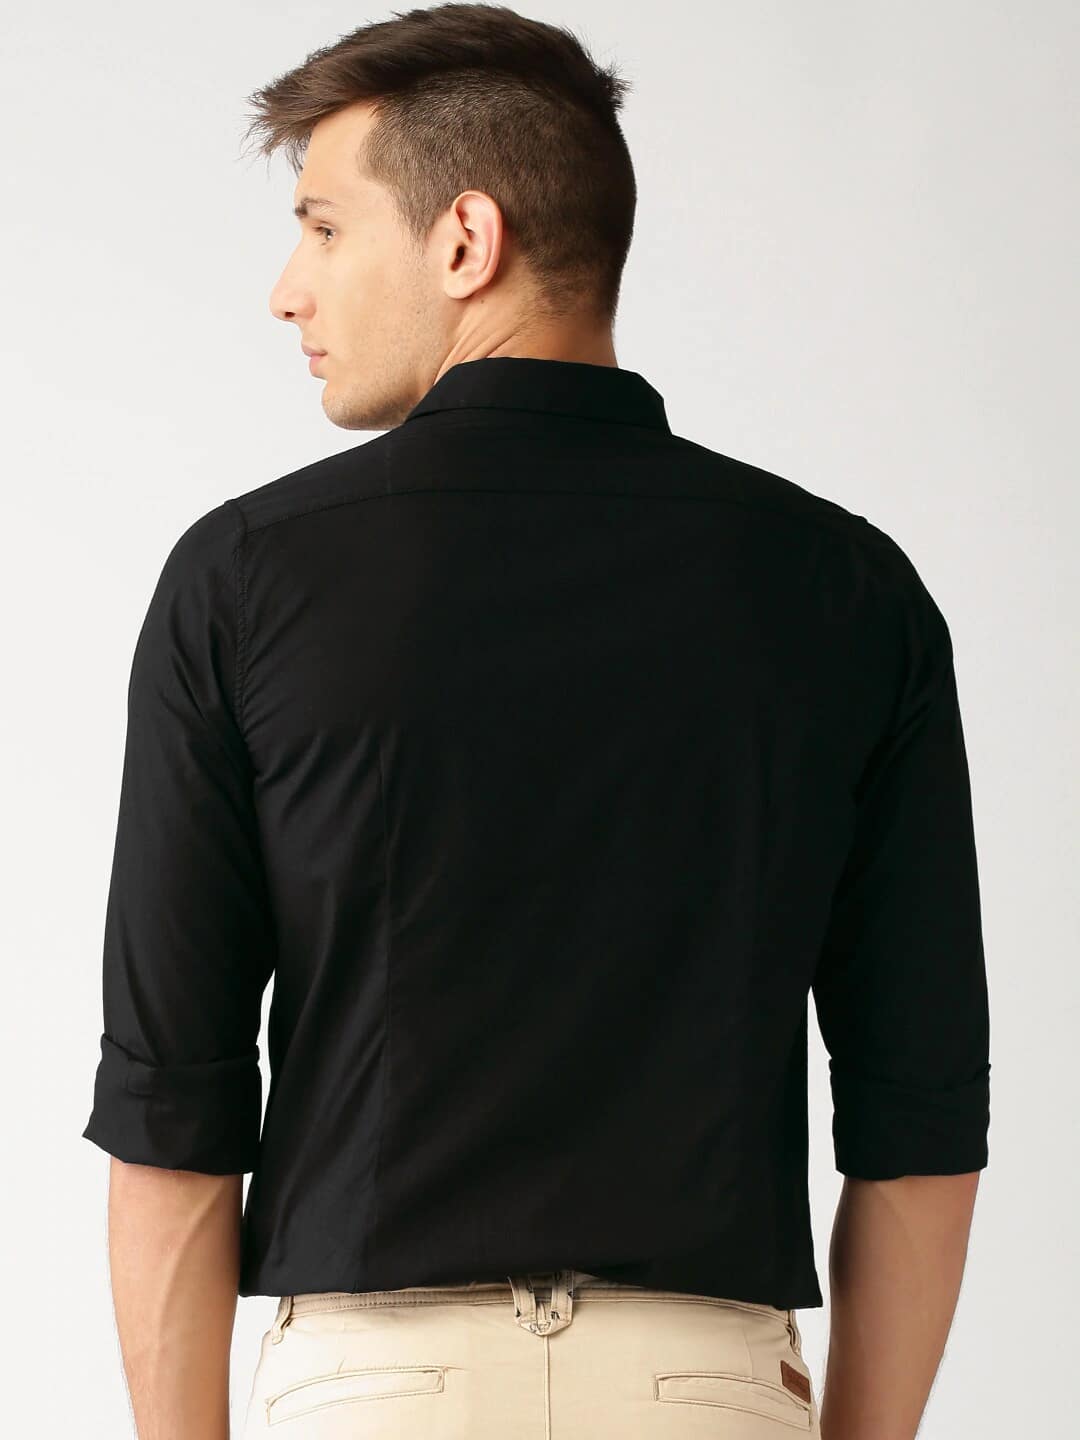 Men's Black Formal Shirt